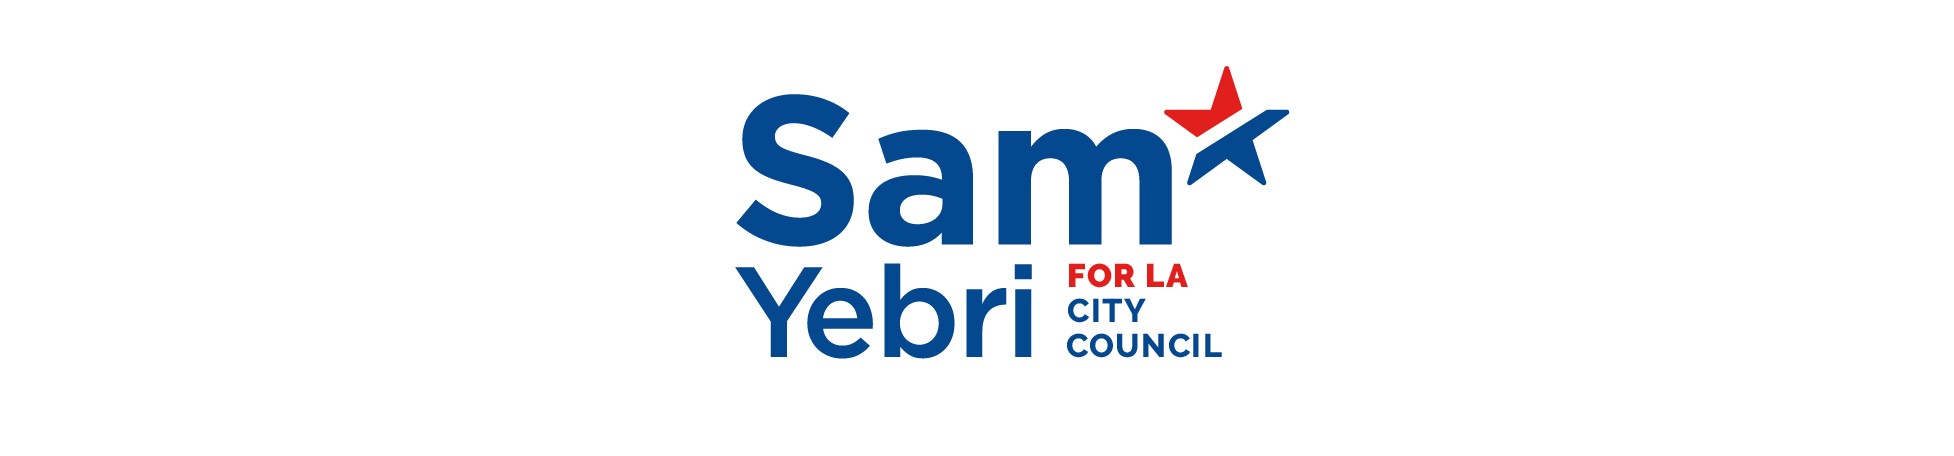 Sam Yebri for City Council 2022